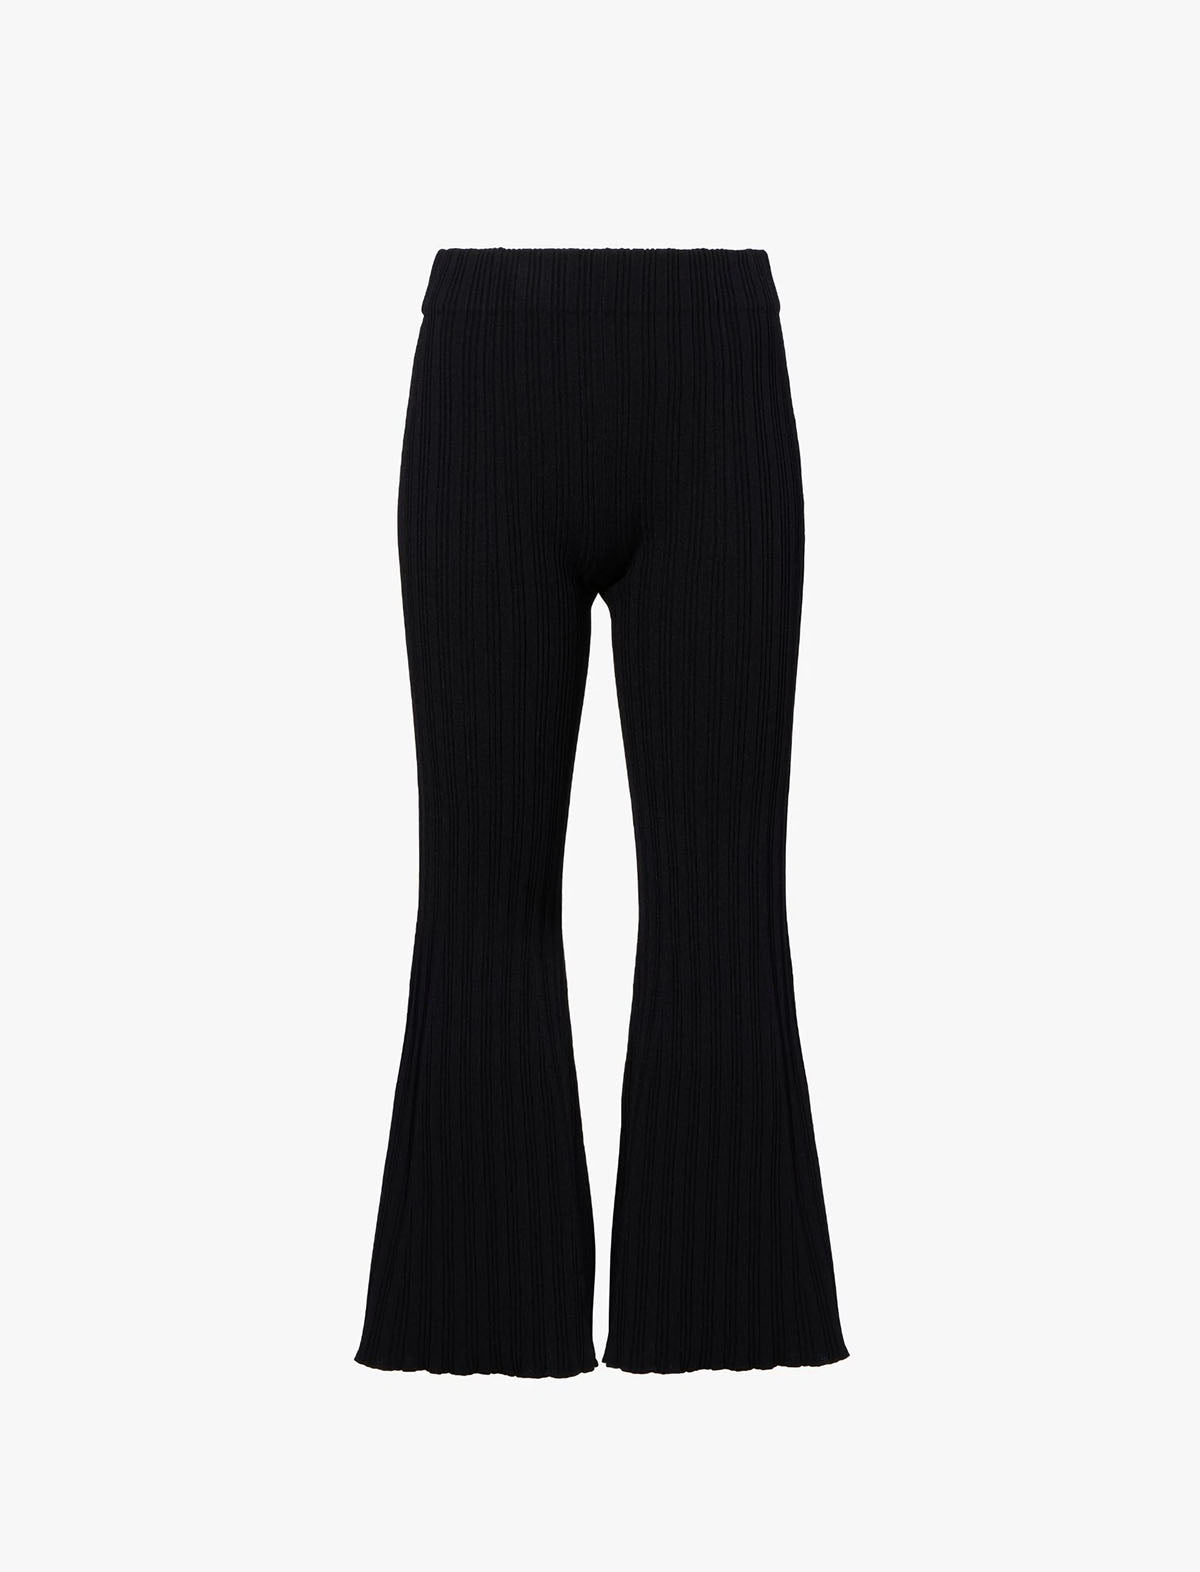 PROENZA SCHOULER WHITE LABEL Knit Pants In Black